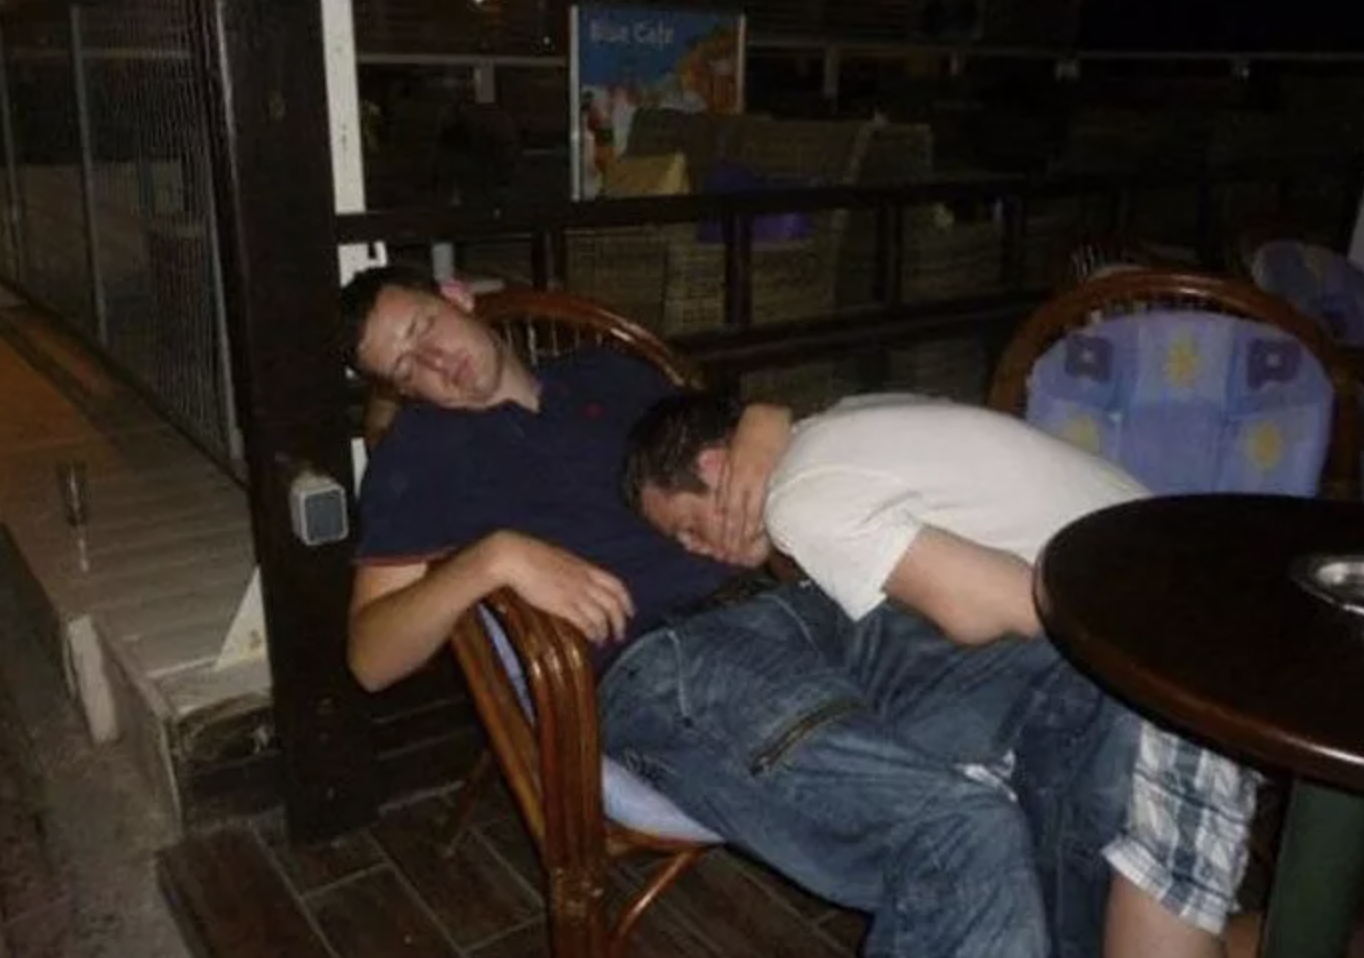 Men sleeping after a party | Source: Shutterstock